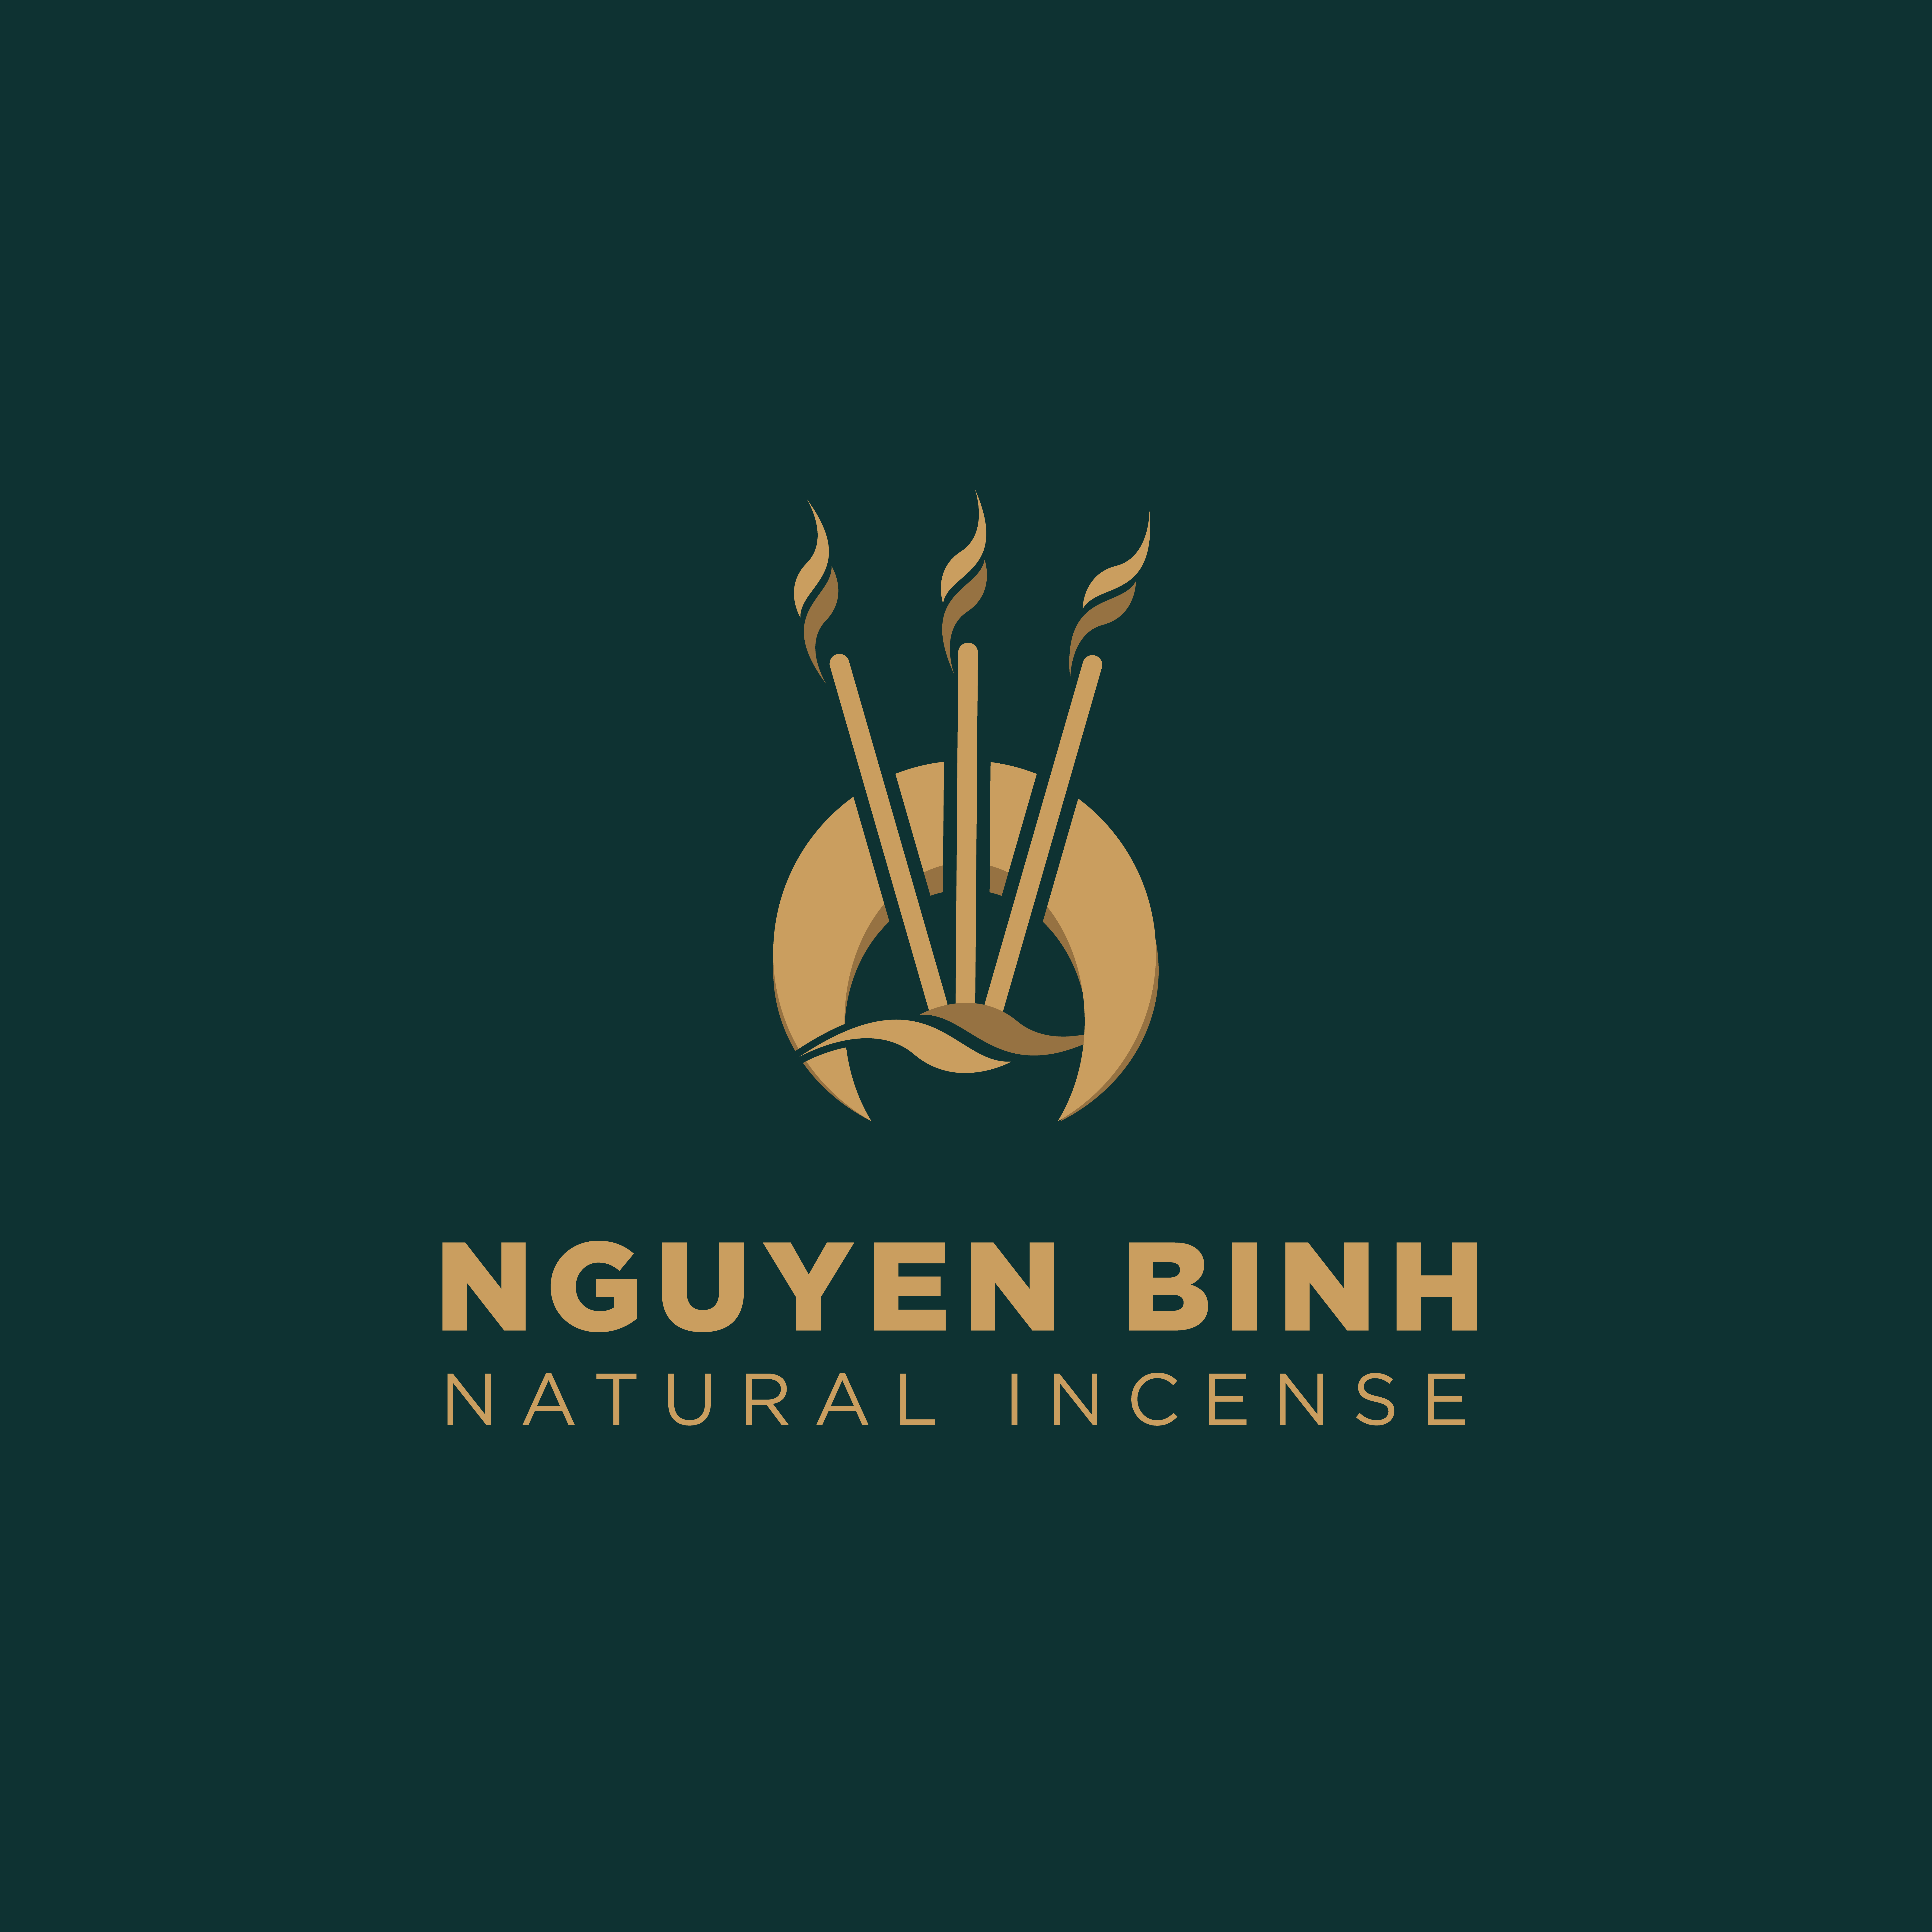 Nguyen Binh Import and Export Co., Ltd